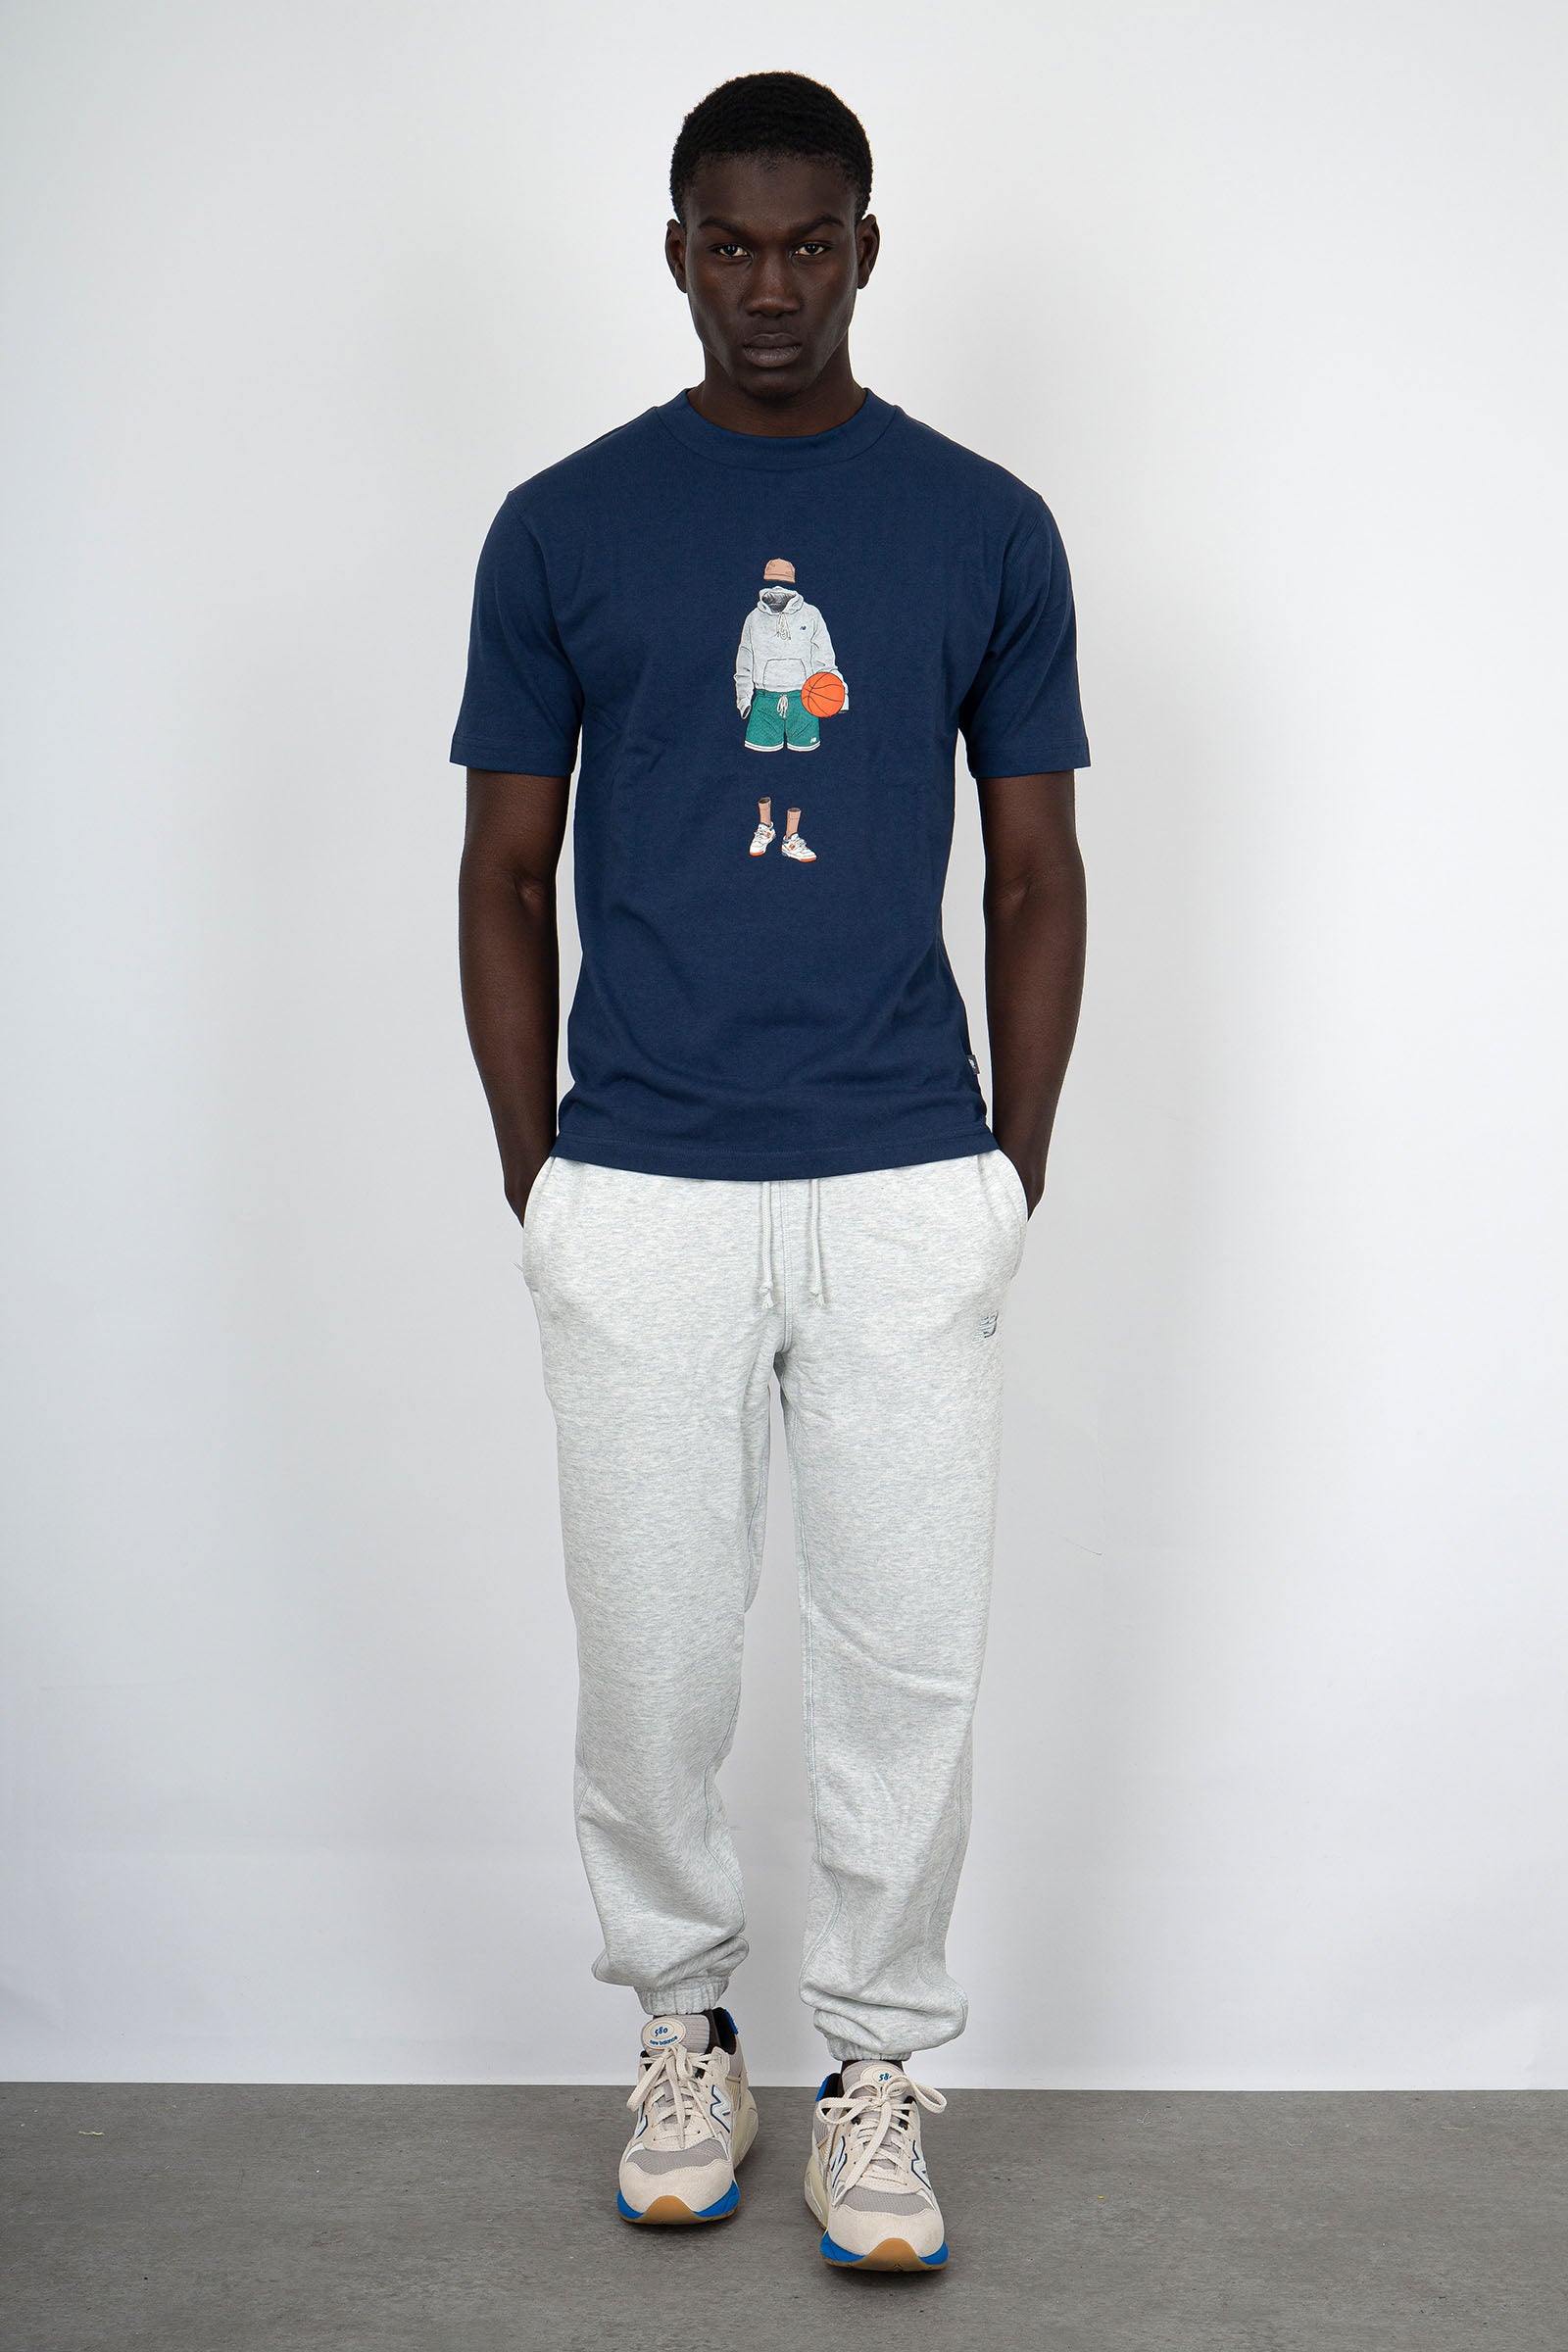 New Balance T-shirt NB Athletics Basketball Style Cotton Blue - 2